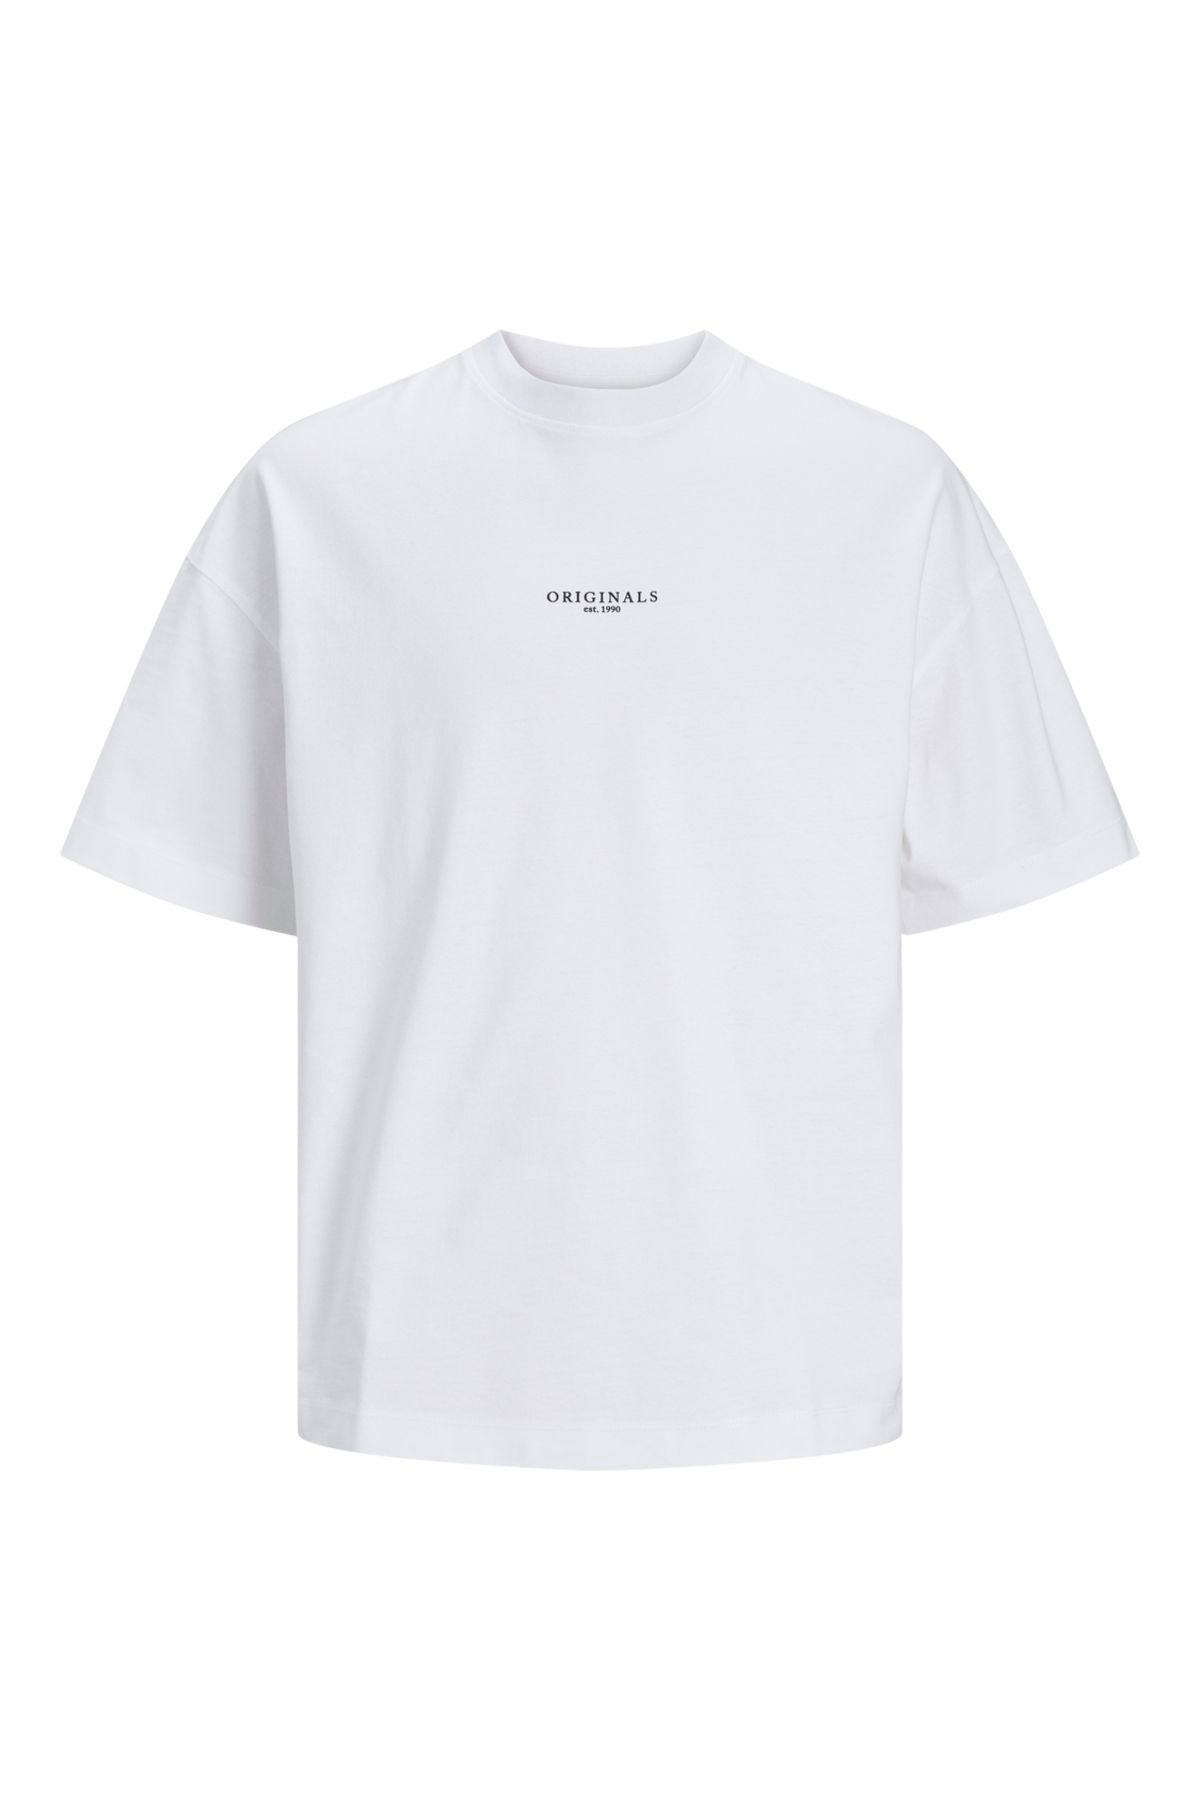 Jack & Jones Jorsantorını Tee Ss Crew Neck Erkek T-shirt 12251774 Bright White